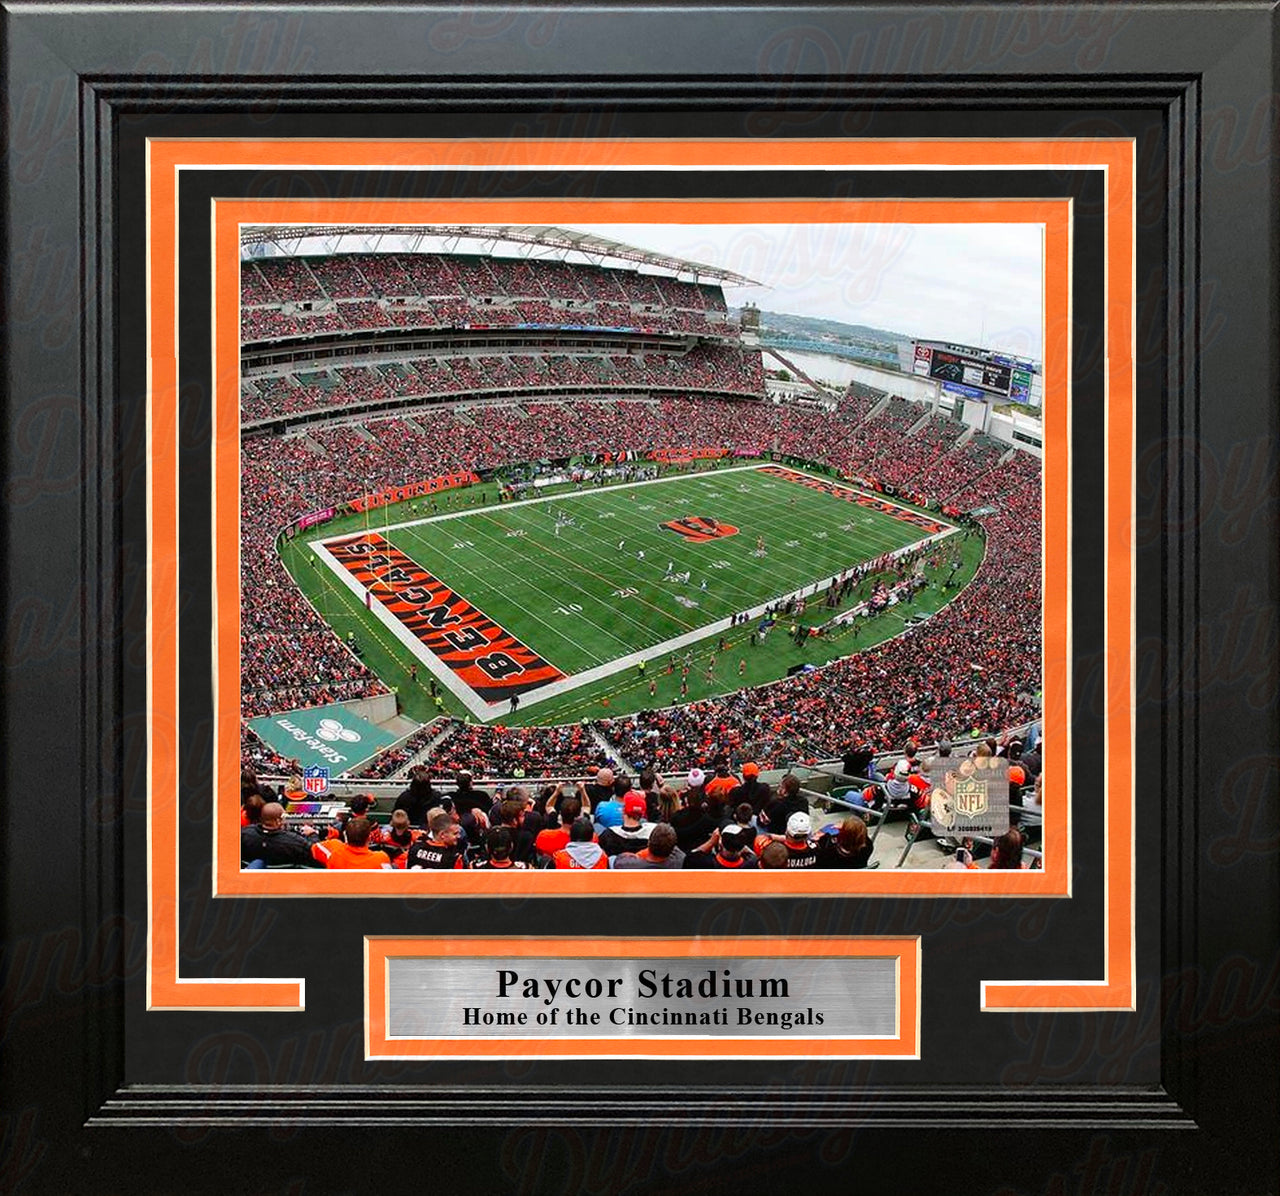 Cincinnati Bengals Paul Brown Stadium 8" x 10" Framed Football Photo - Dynasty Sports & Framing 